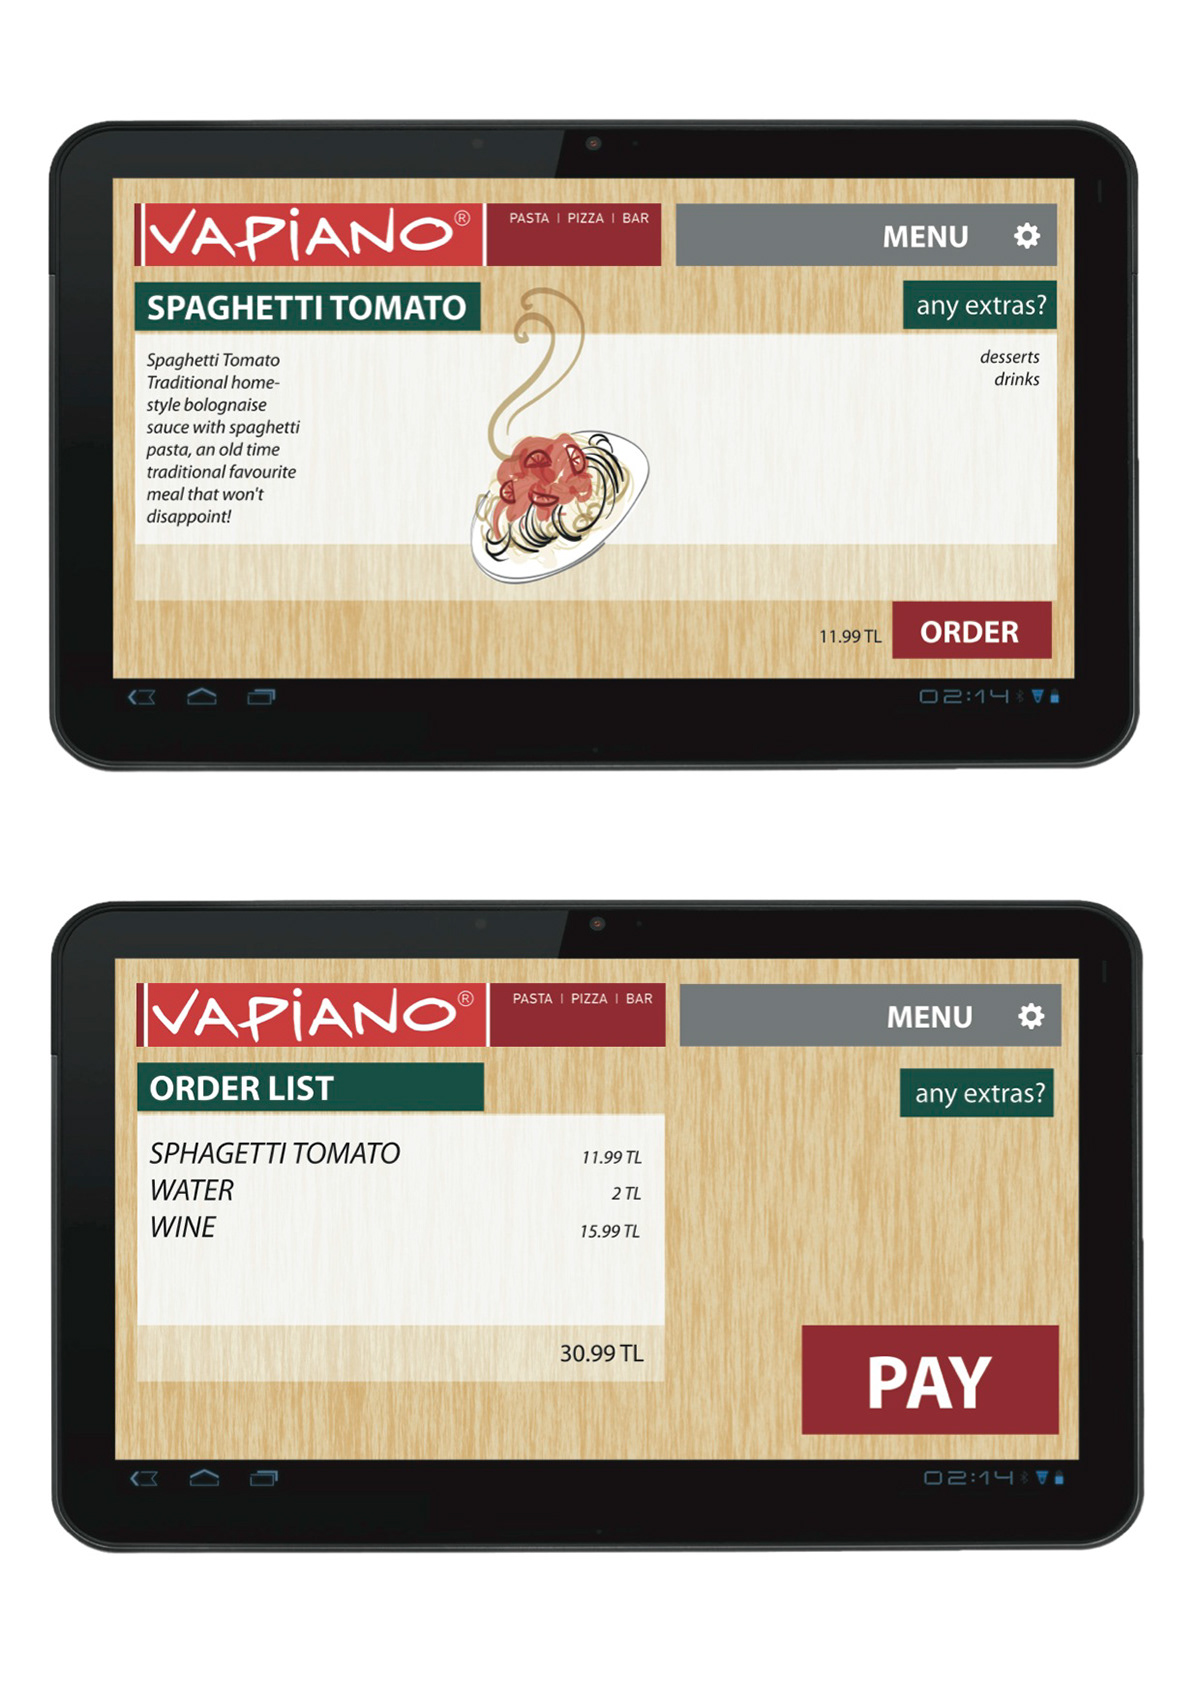 Interface  interaction  Menu  tablet  tablet menu  vapiano  order  Pizza Pasta  graphic design  Illustration  typographic Food 